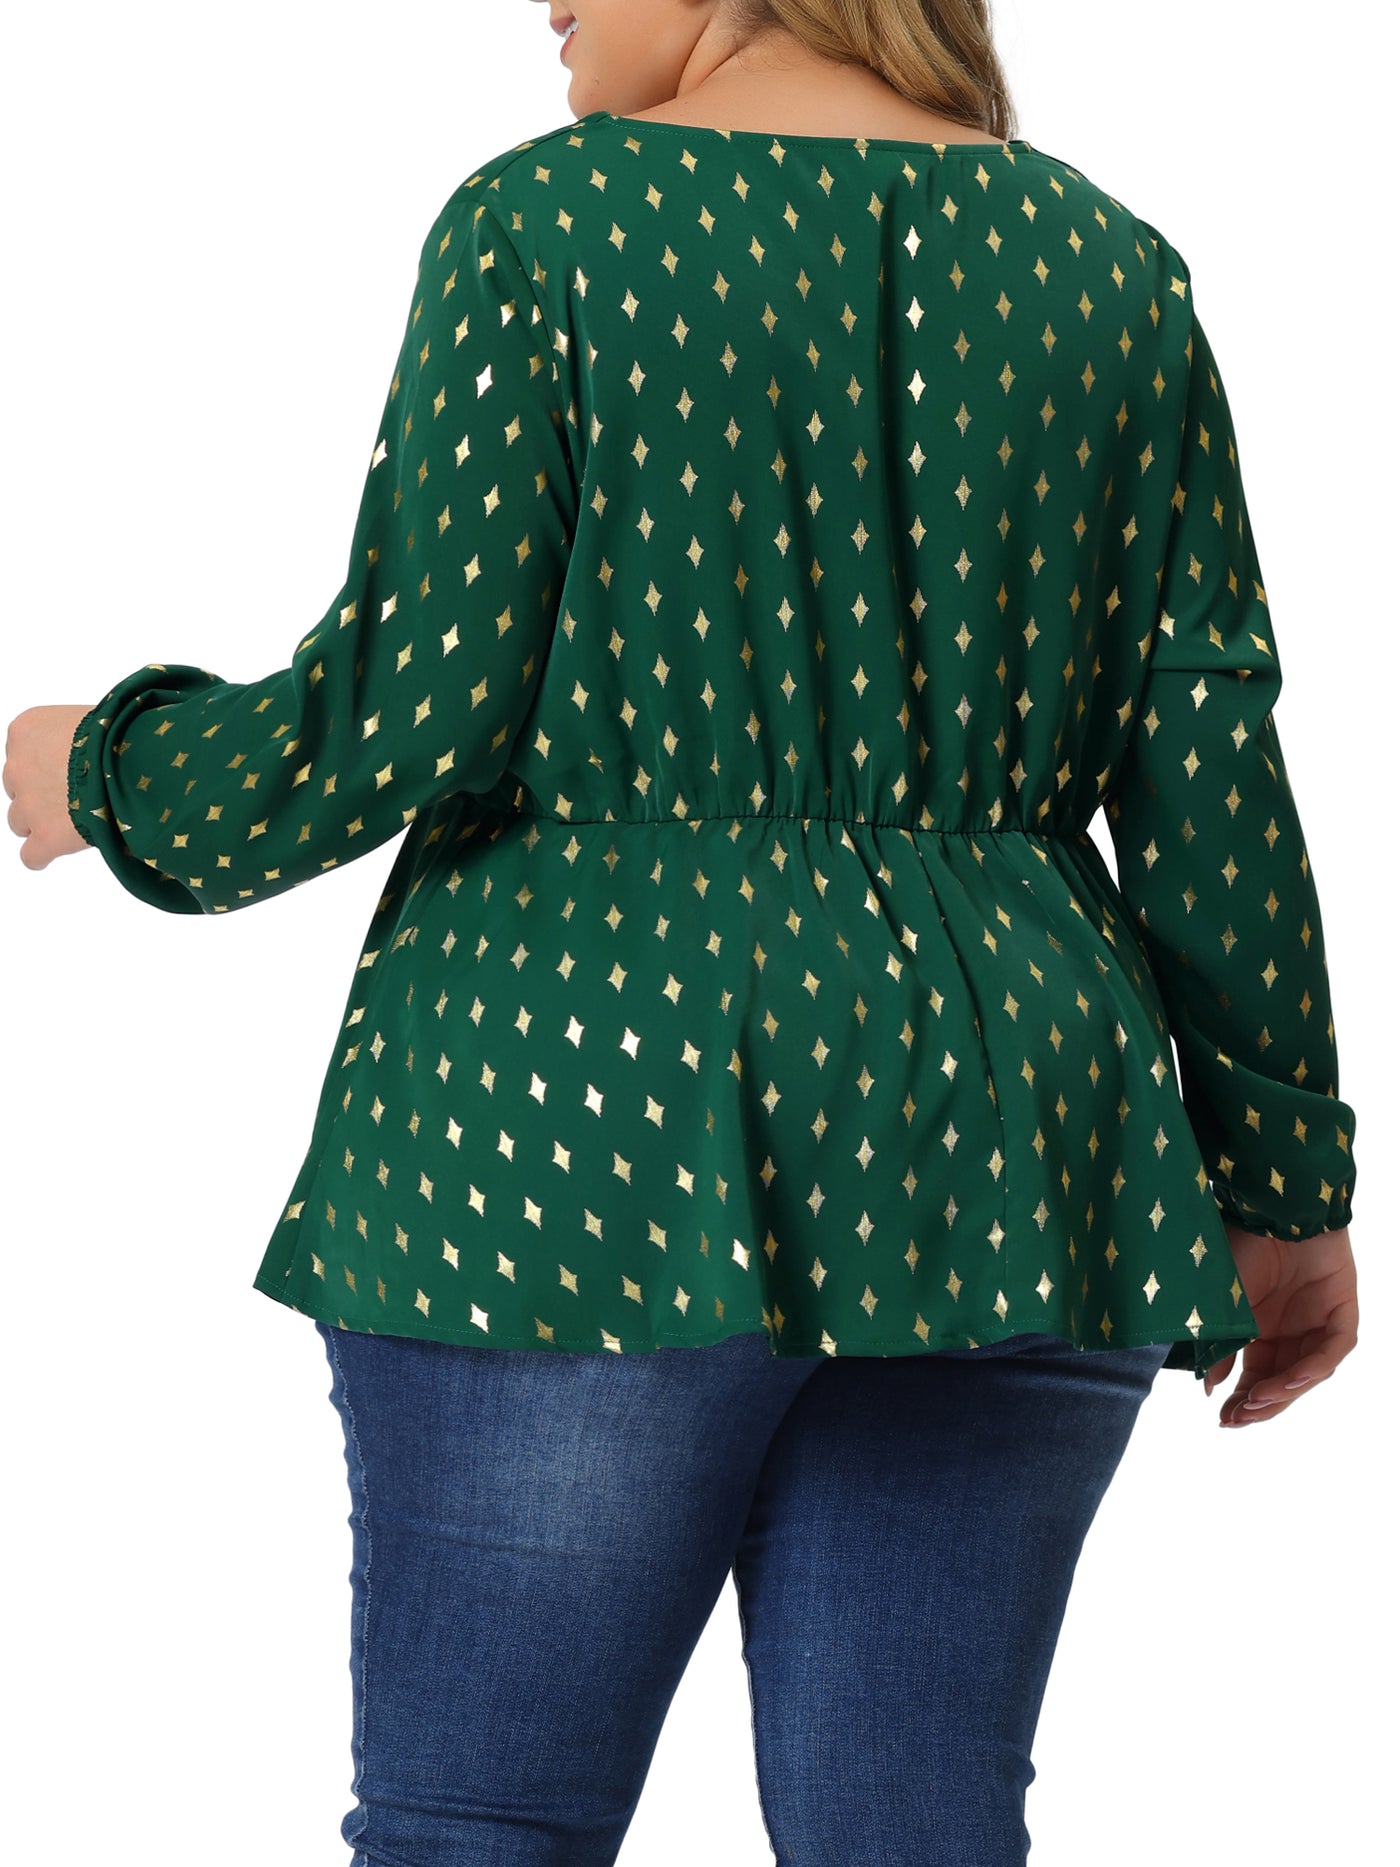 Bublédon Plus Size Blouses for Women Long Sleeve V Neck Geometric Print Ruffled Elastic Waist Tunic Tops